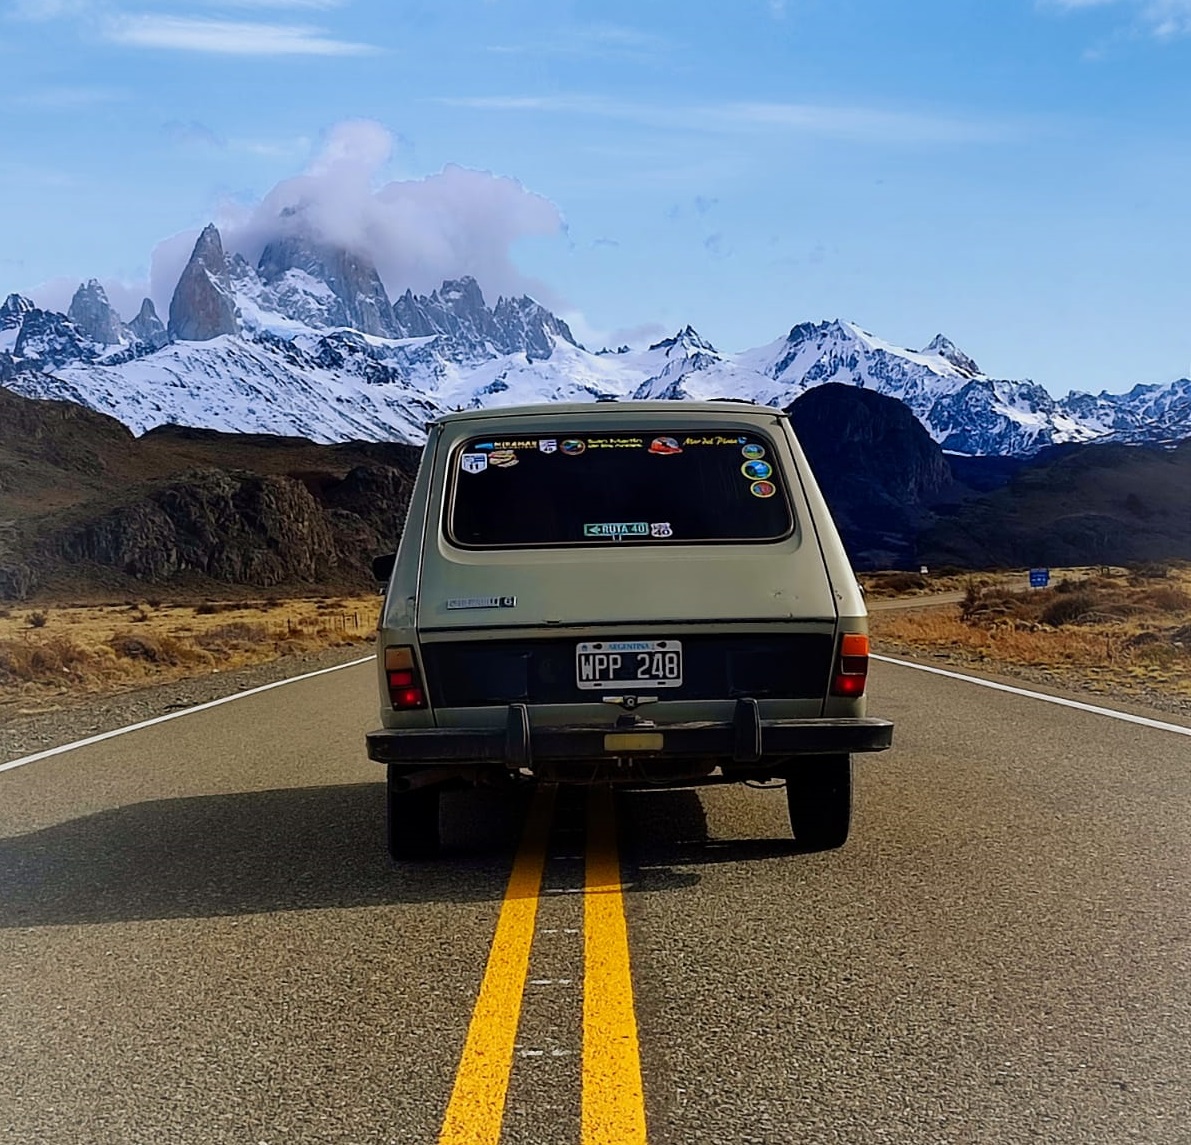 Su Renaul 6 se la bancó por toda la Ruta 40, al atravesar la Patagonia. Fotos: Luiyi Urli. Yvon Chouinard